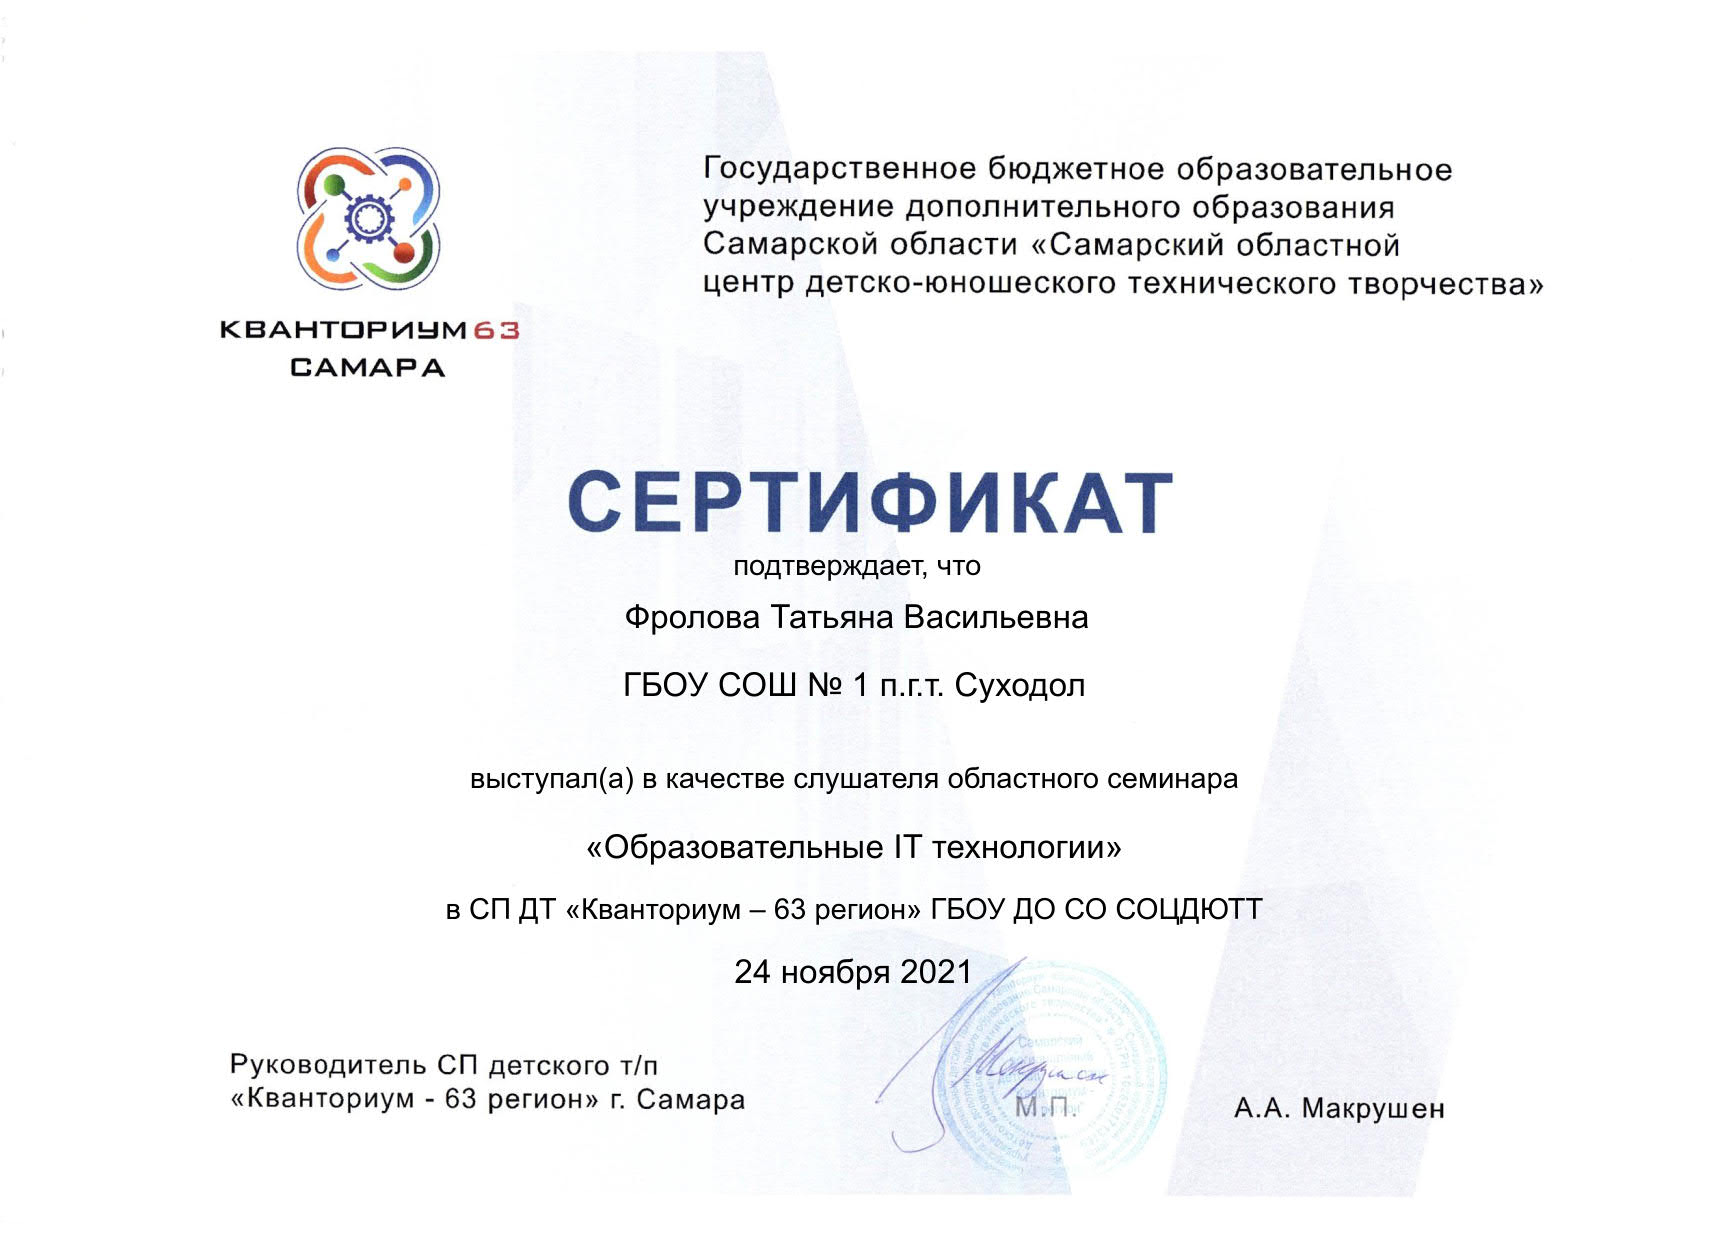 Сертификат Кванториум 63 Фролова